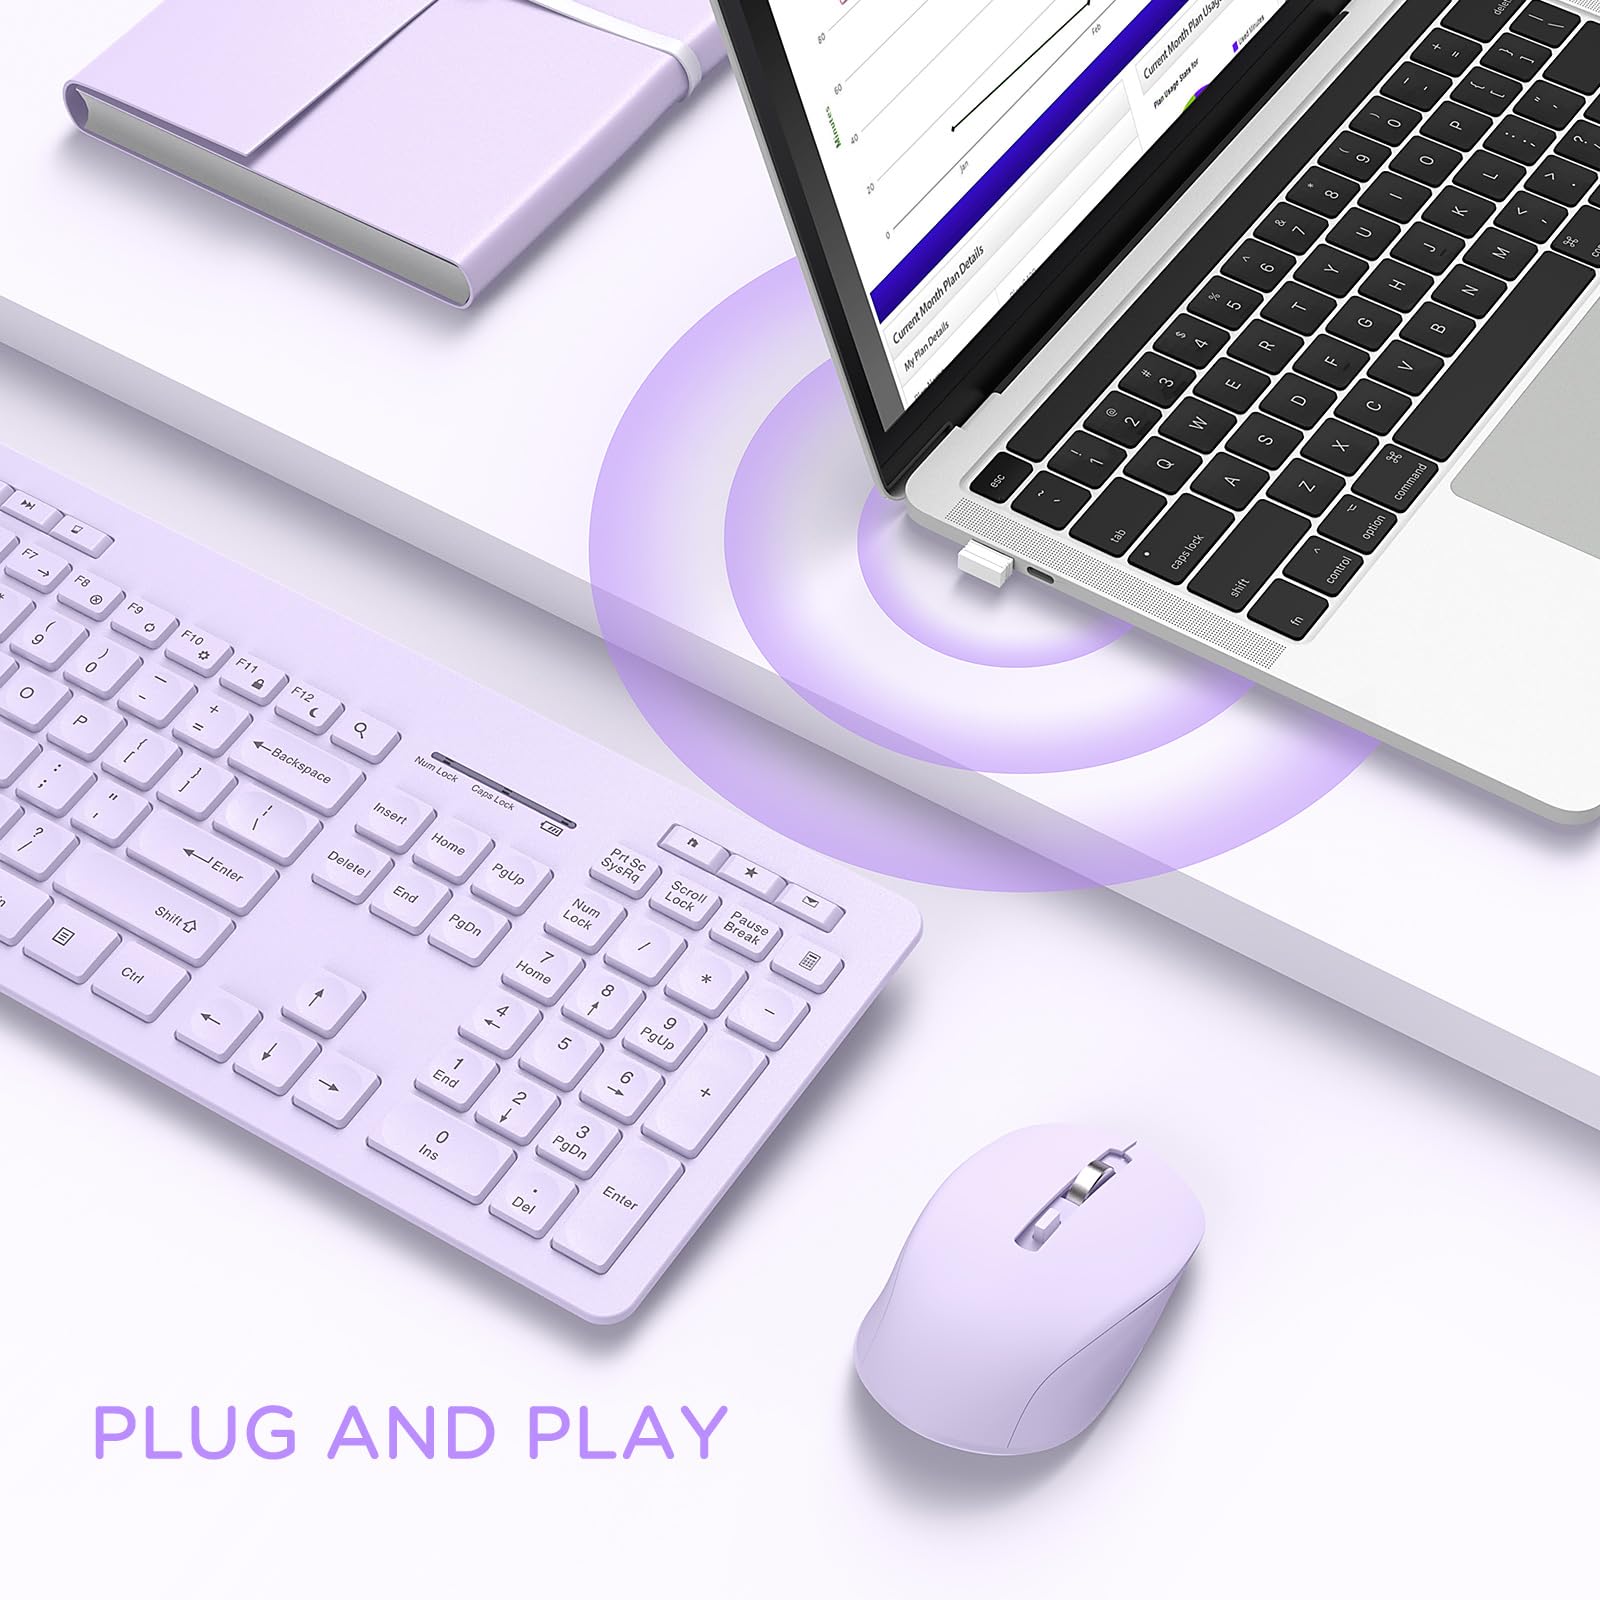 Seenda Wireless Keyboard and Mouse Combo, Full Size 2.4GHz Wireless Quiet Keyboard Mouse with USB Receiver, Cute Ergonomic Cordless Keyboard Mouse for Windows Laptop Computer Desktop, Purple